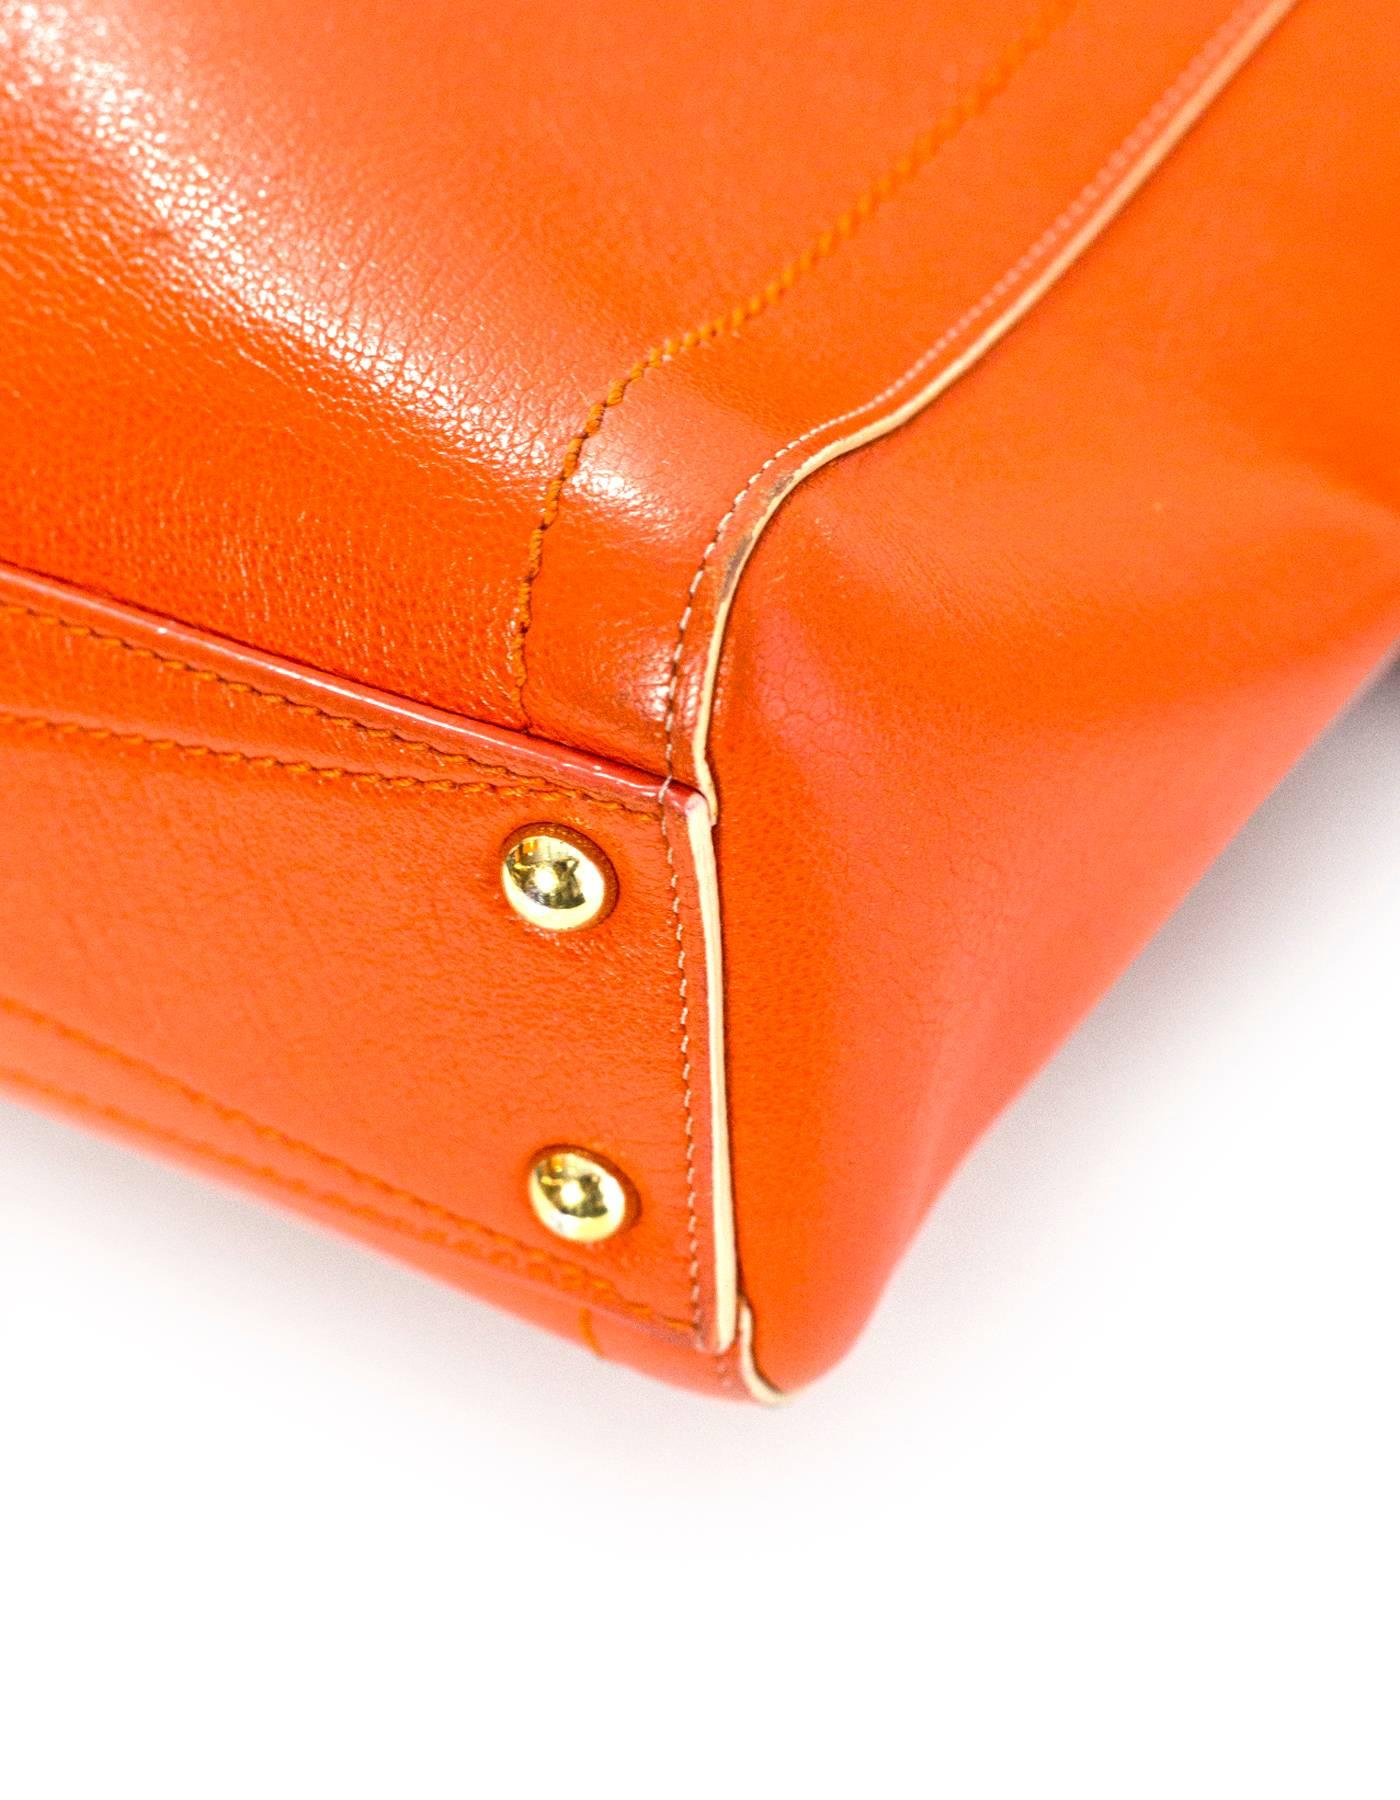 orange satchel bag